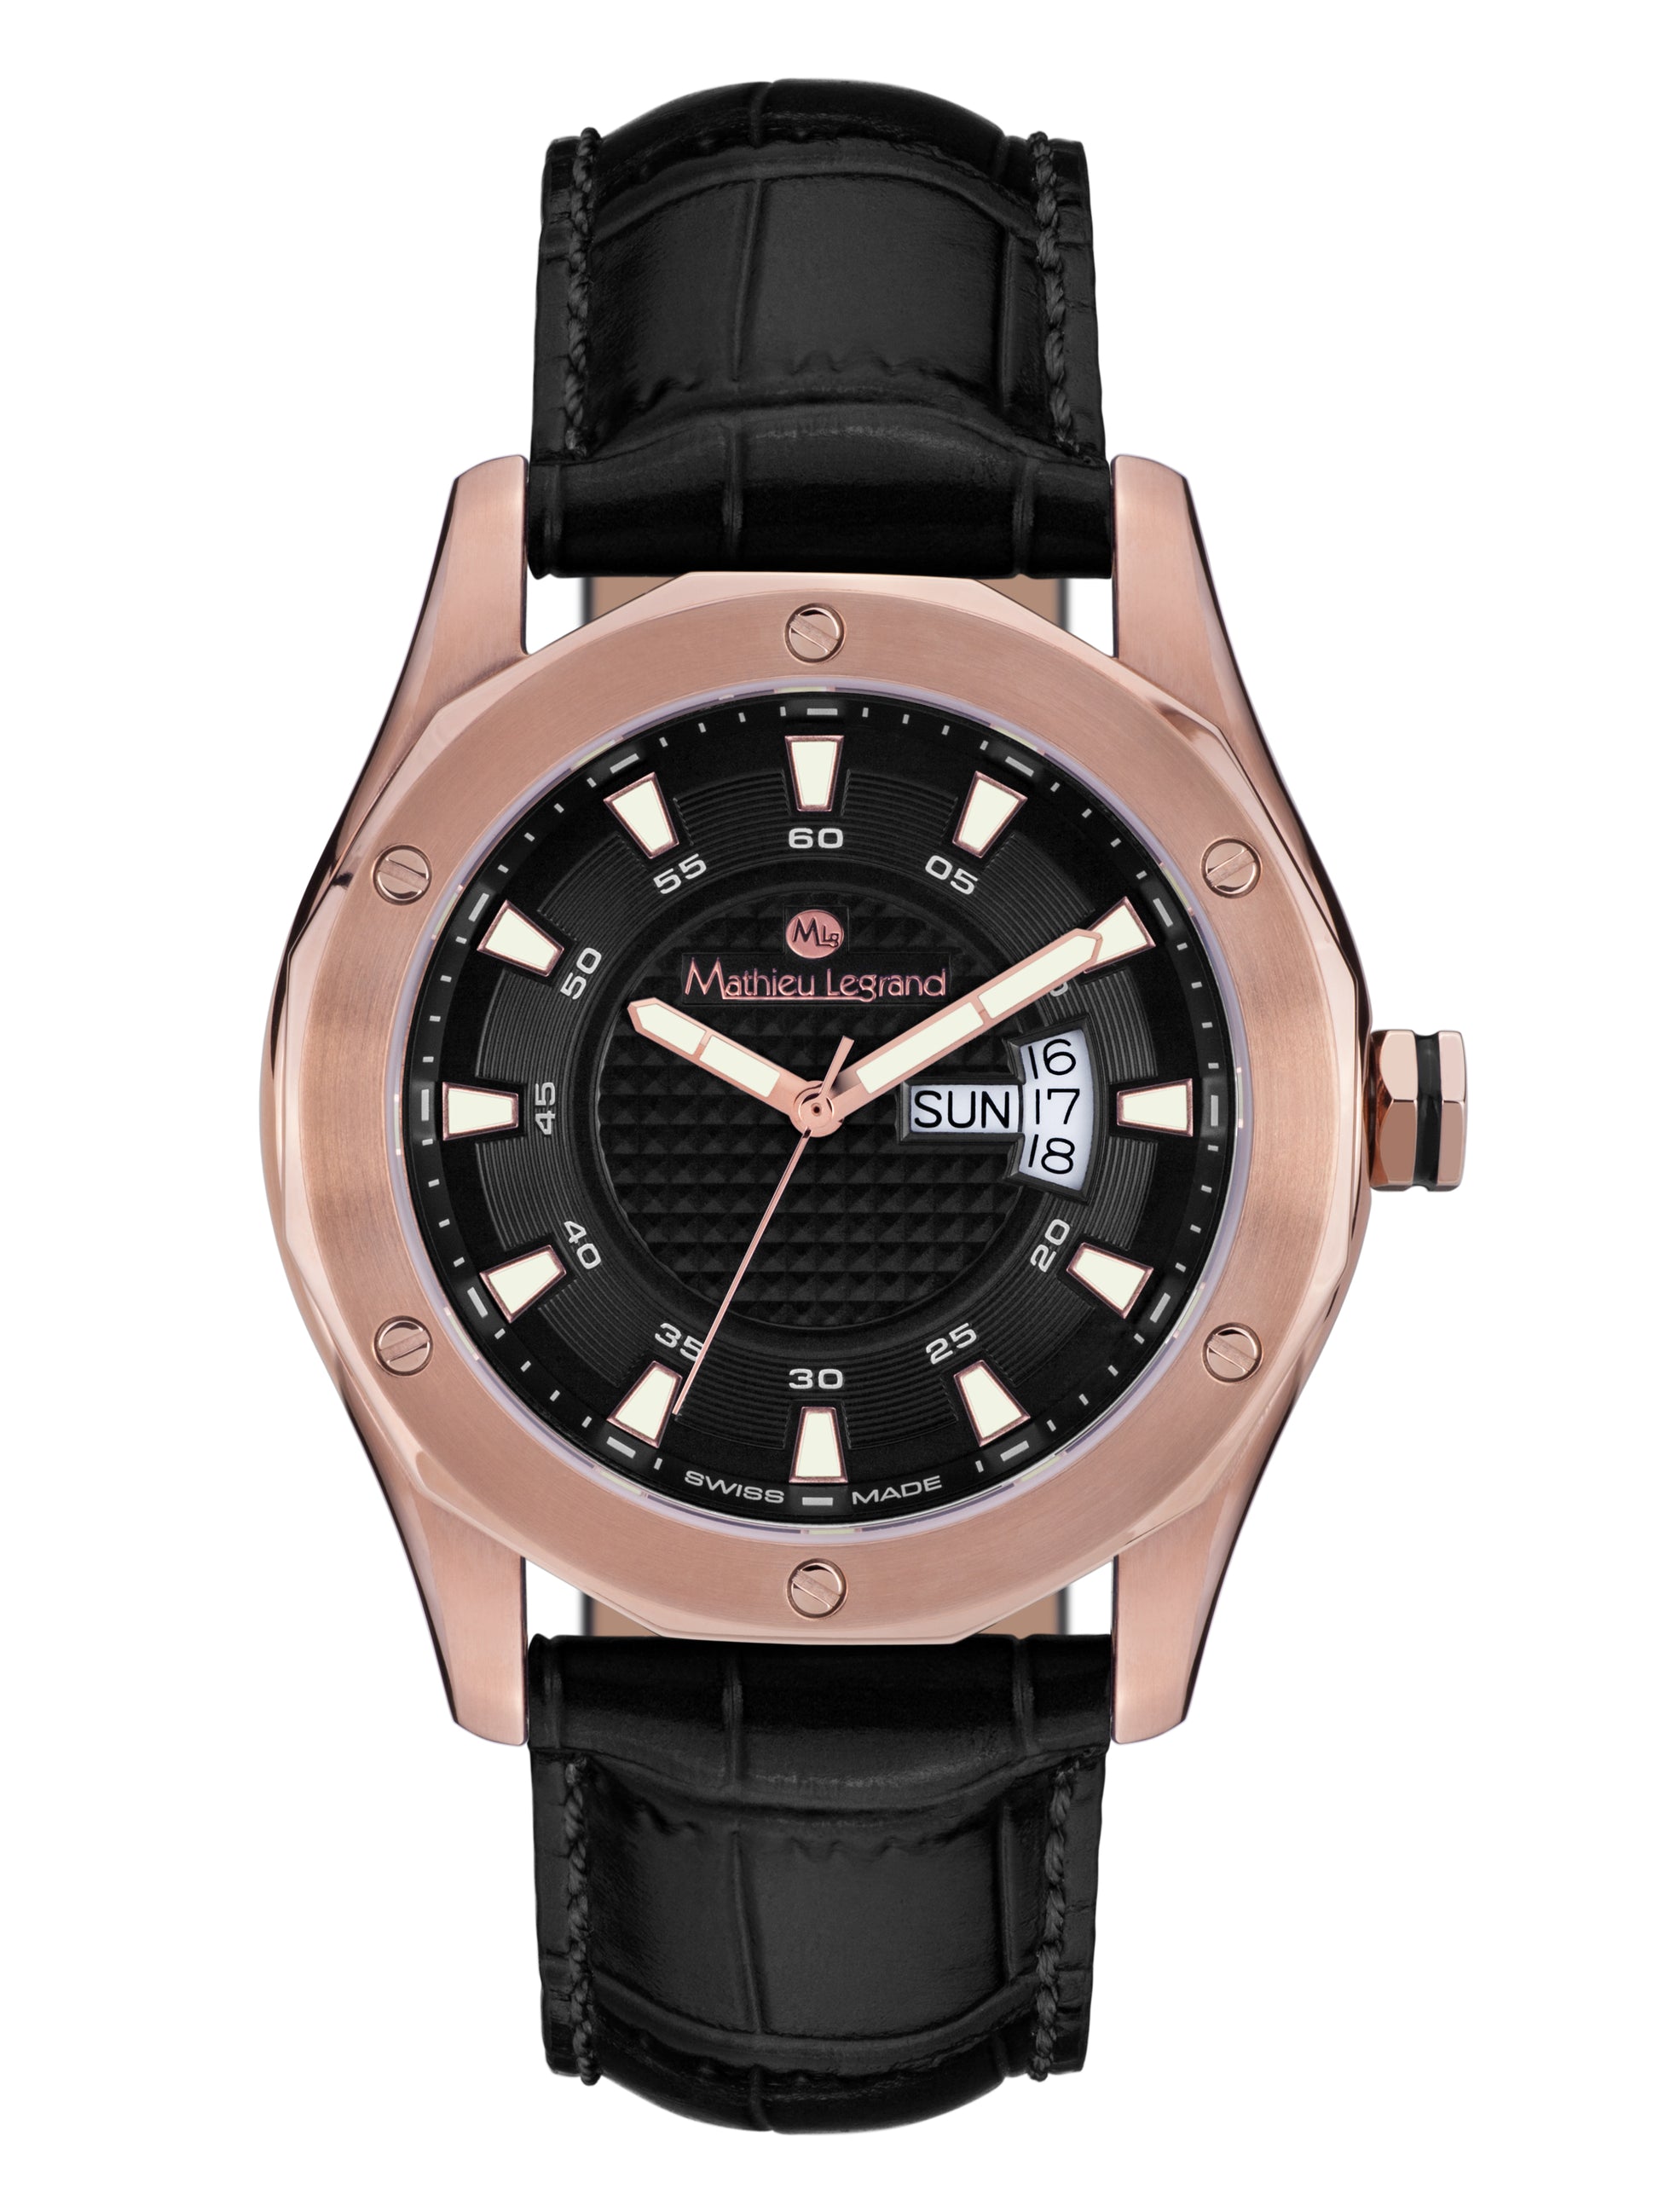 Automatic watches — Dodécagone — Mathieu Legrand — rosegold IP black leather